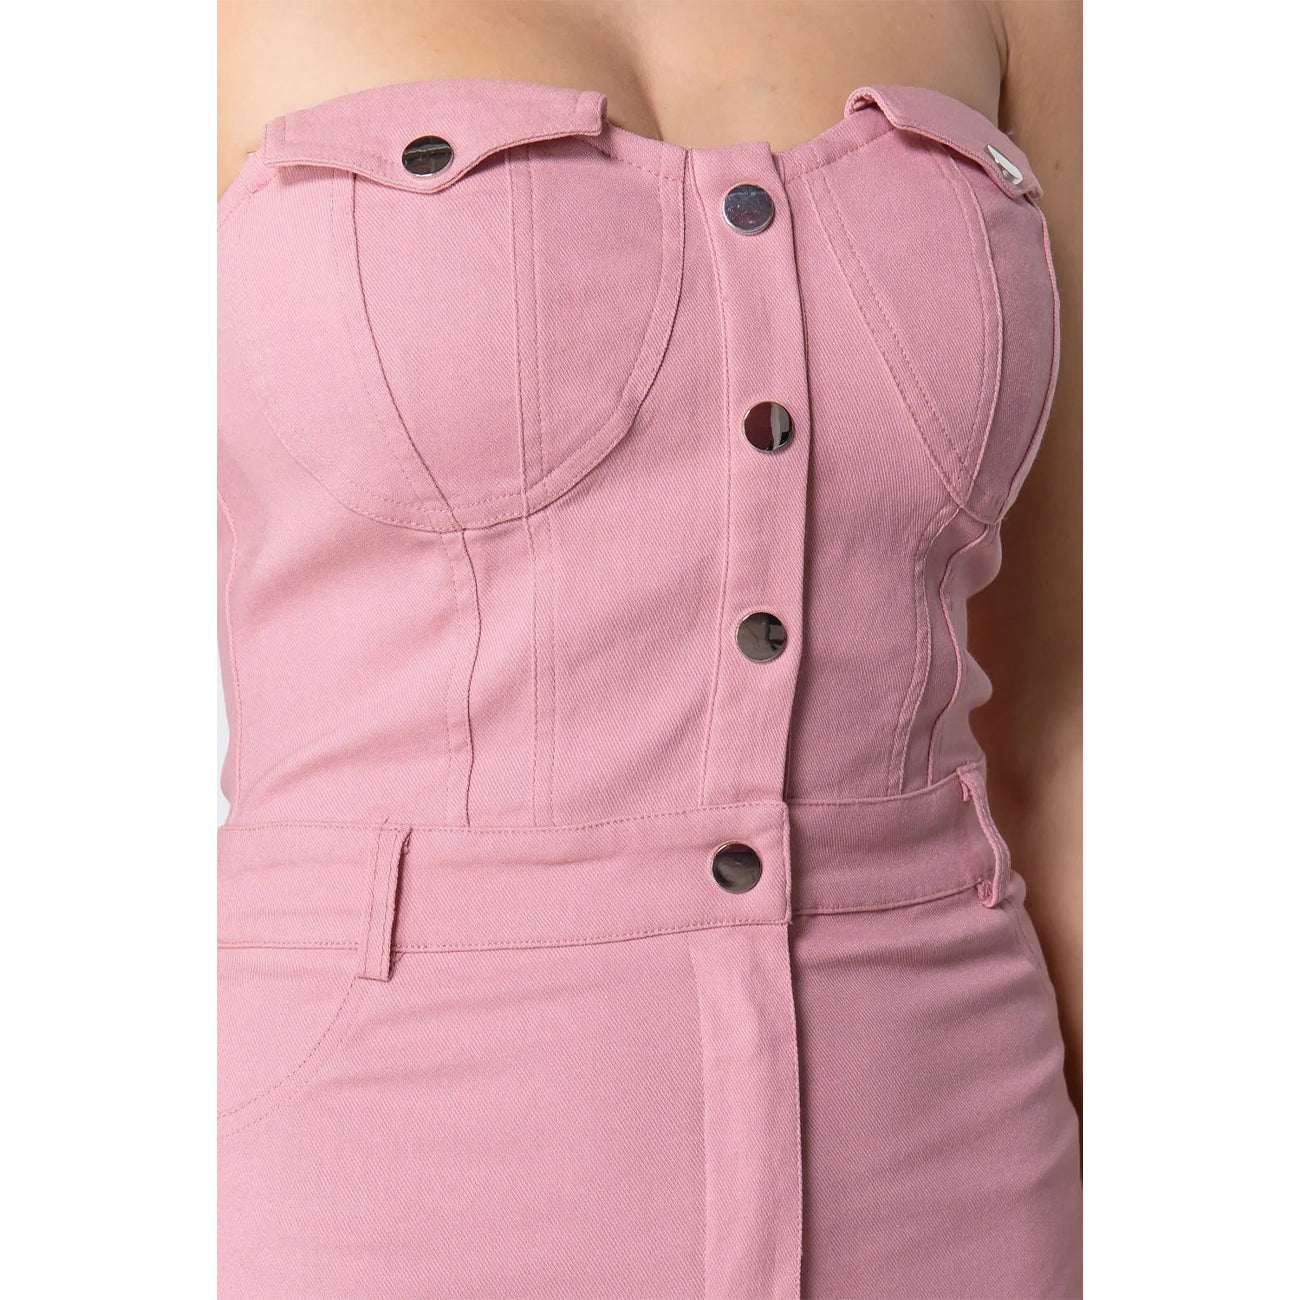 Pink Strapless Button Down Mini Dress